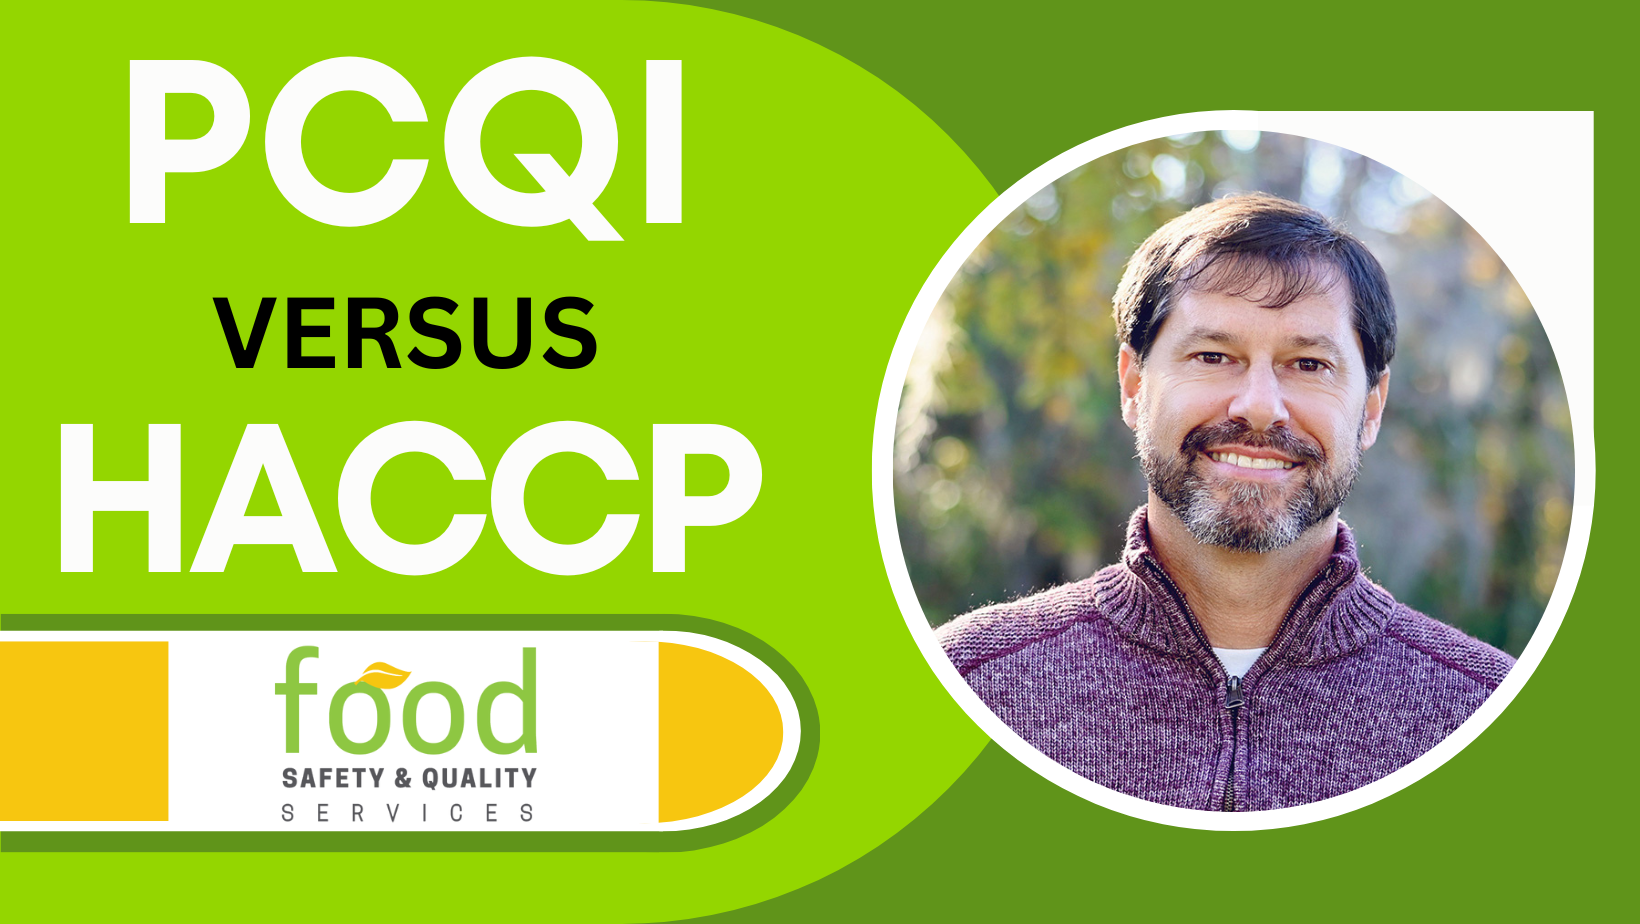 PCQI versus HACCP